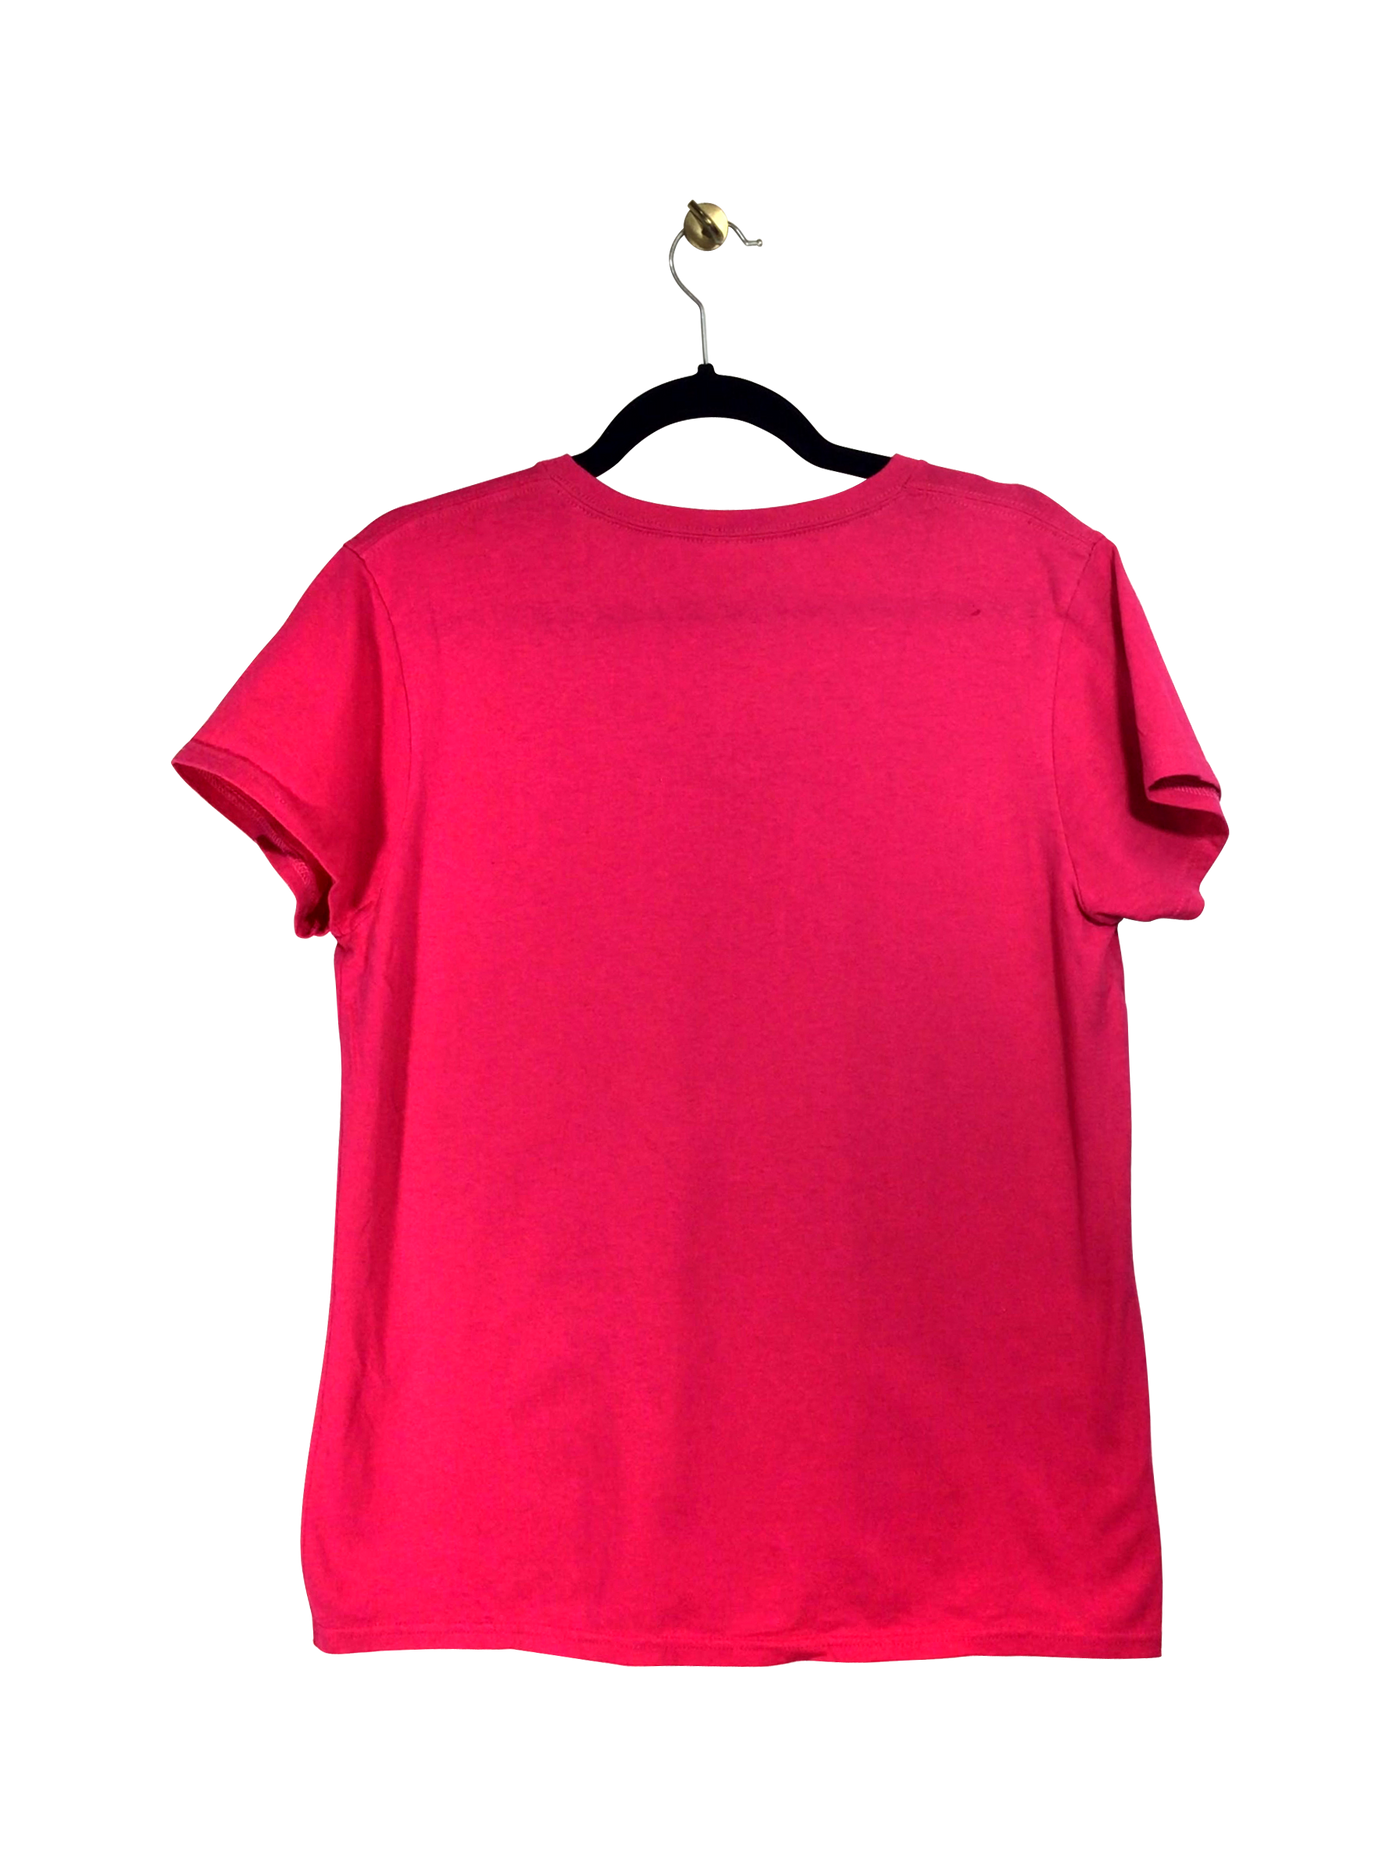 GILDAN Regular fit T-shirt in Pink - Size L | 8.99 $ KOOP